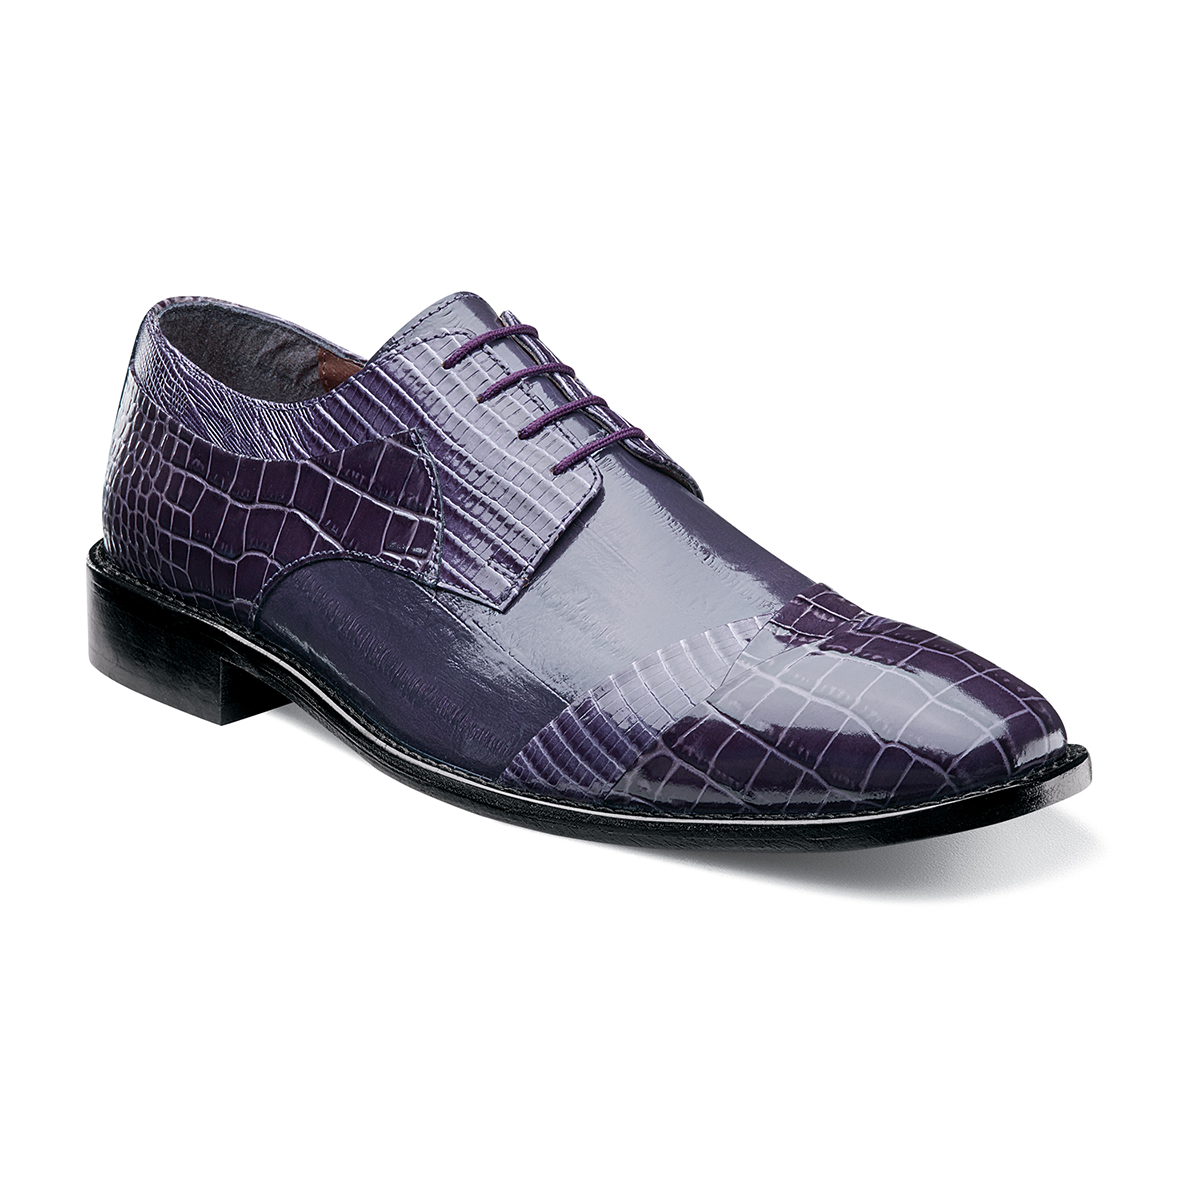 Men's Dress Shoes | Purple Cap Toe Oxford | Stacy Adams Garibaldi